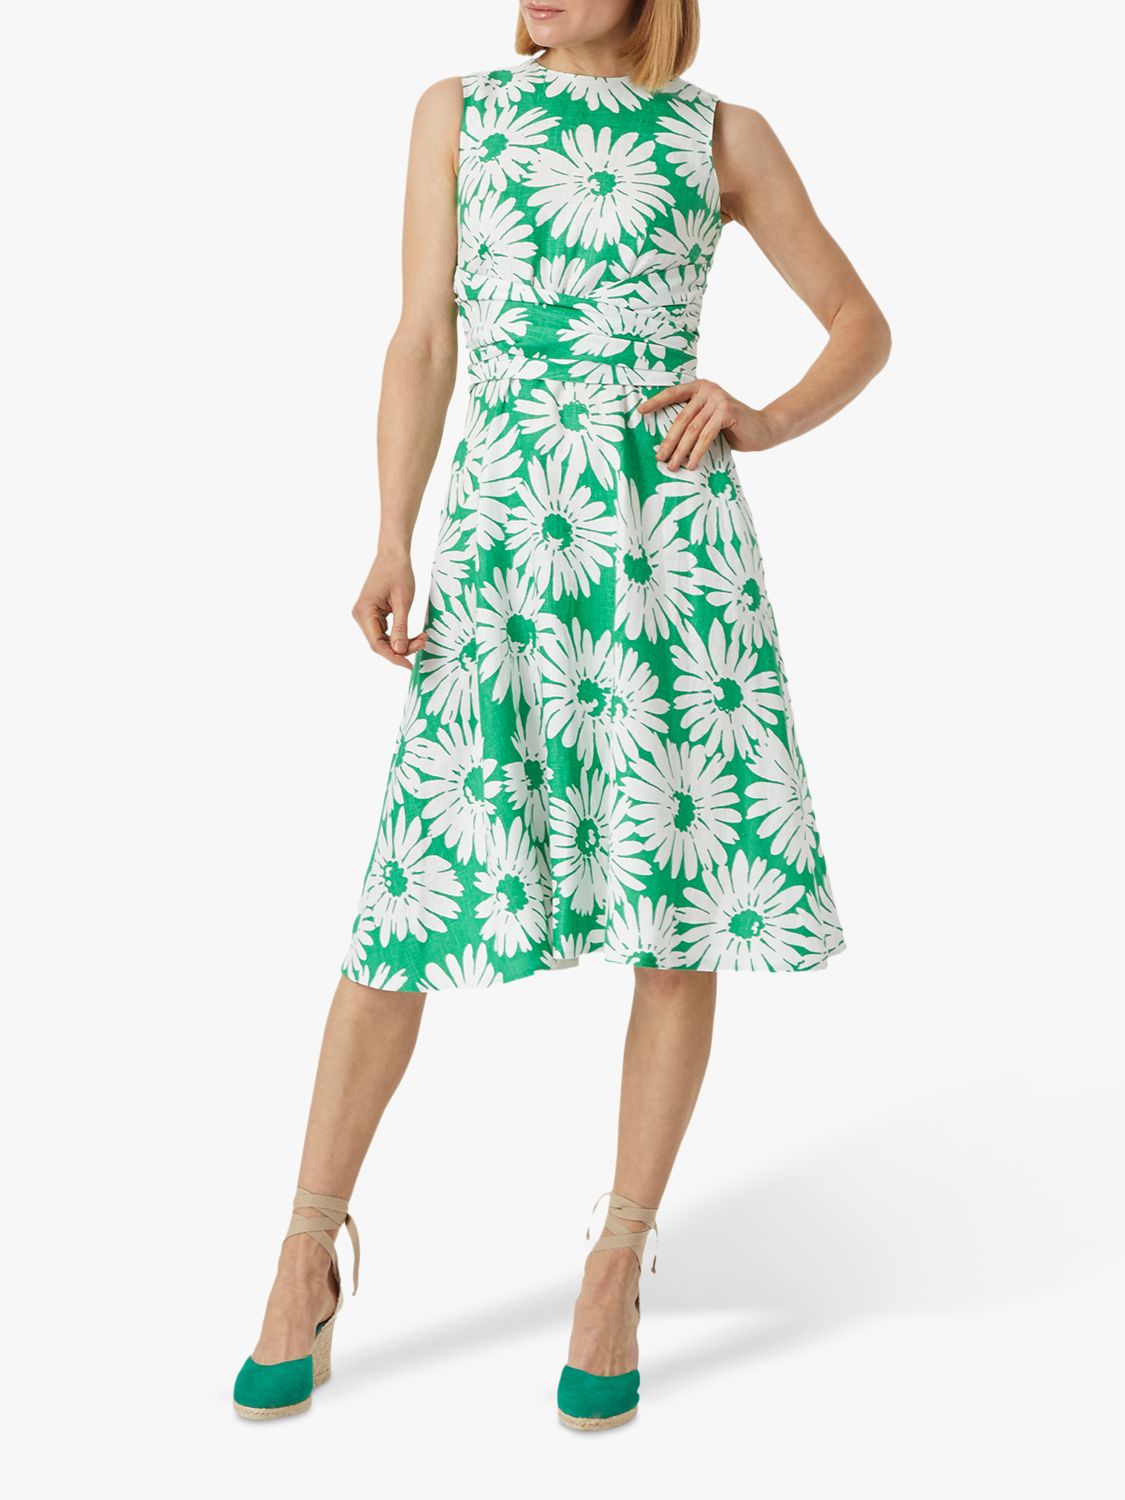 Hobbs Twitchill Floral Print Midi Dress, Green/White